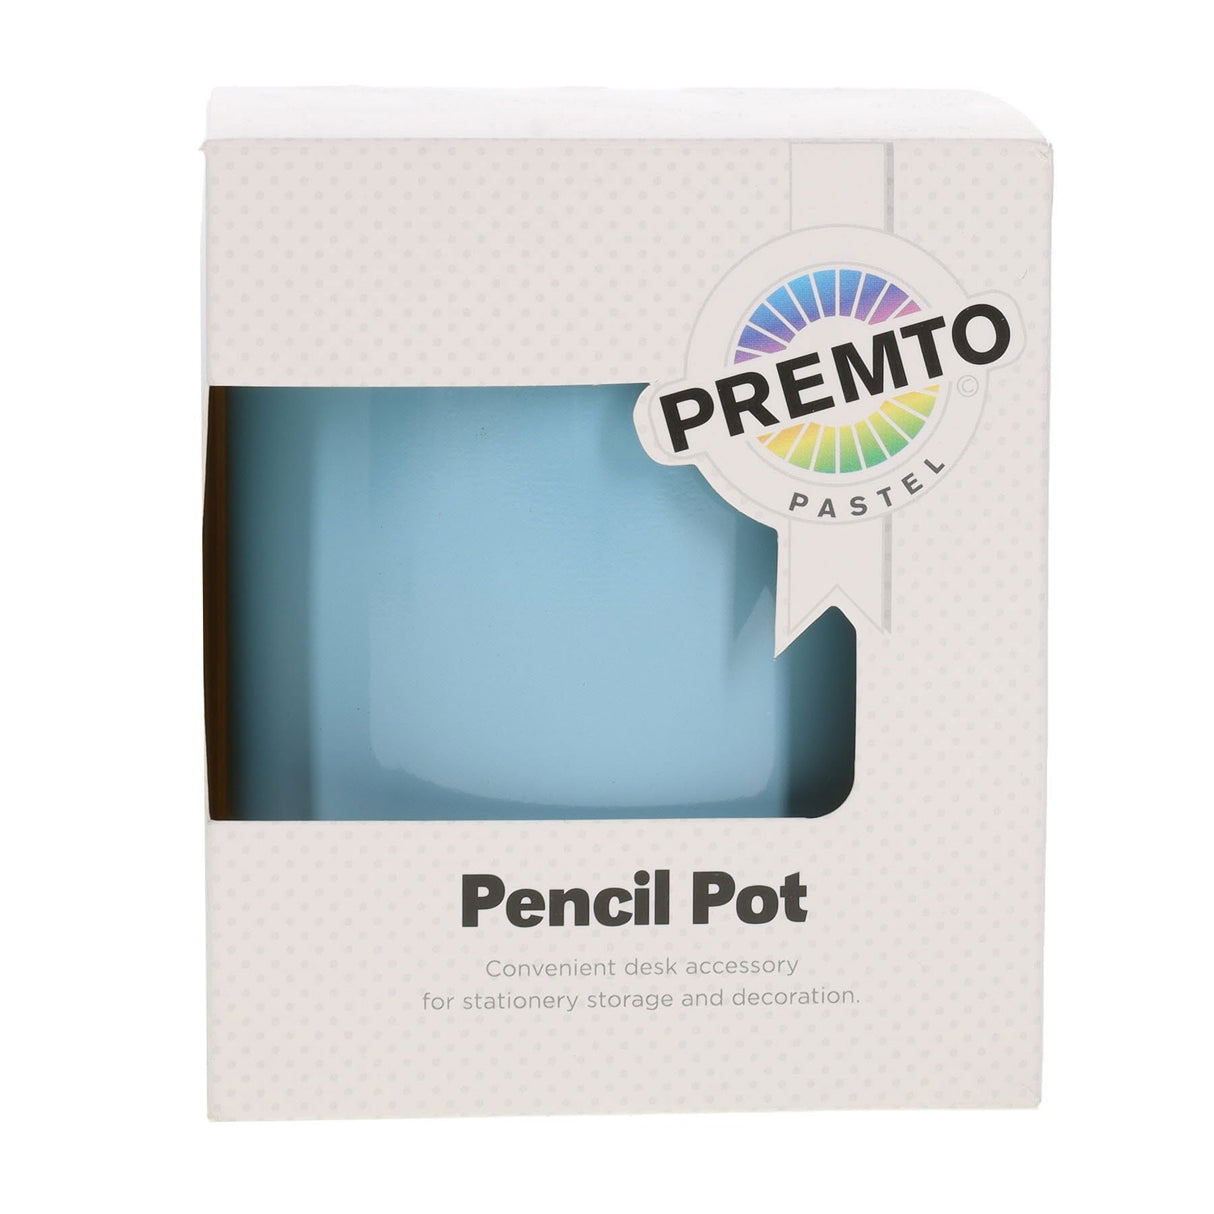 Premto Pastel Tin Pencil Pot - Mint Magic-Desk Tidy-Premto|StationeryShop.co.uk